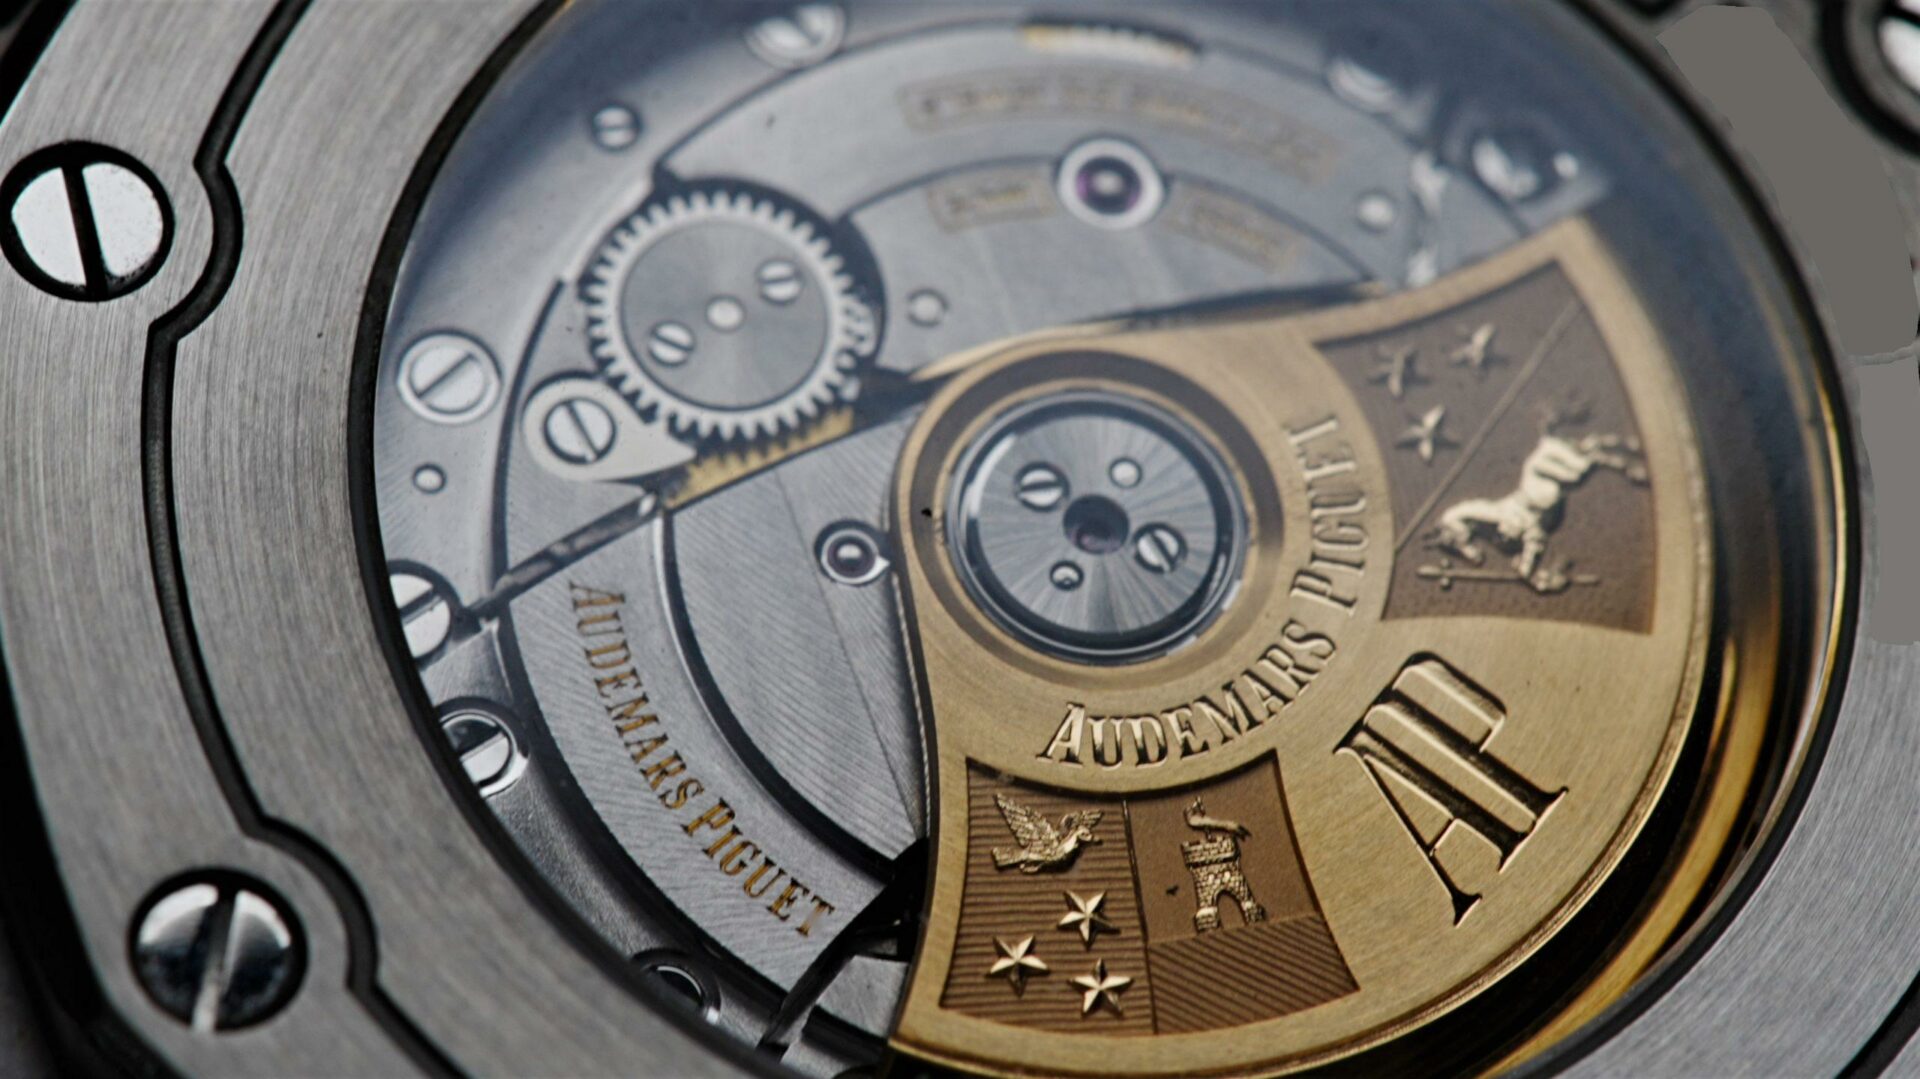 Back side of the Audemars Piguet Royal Oak Offshore Chronograph Elephant watch.